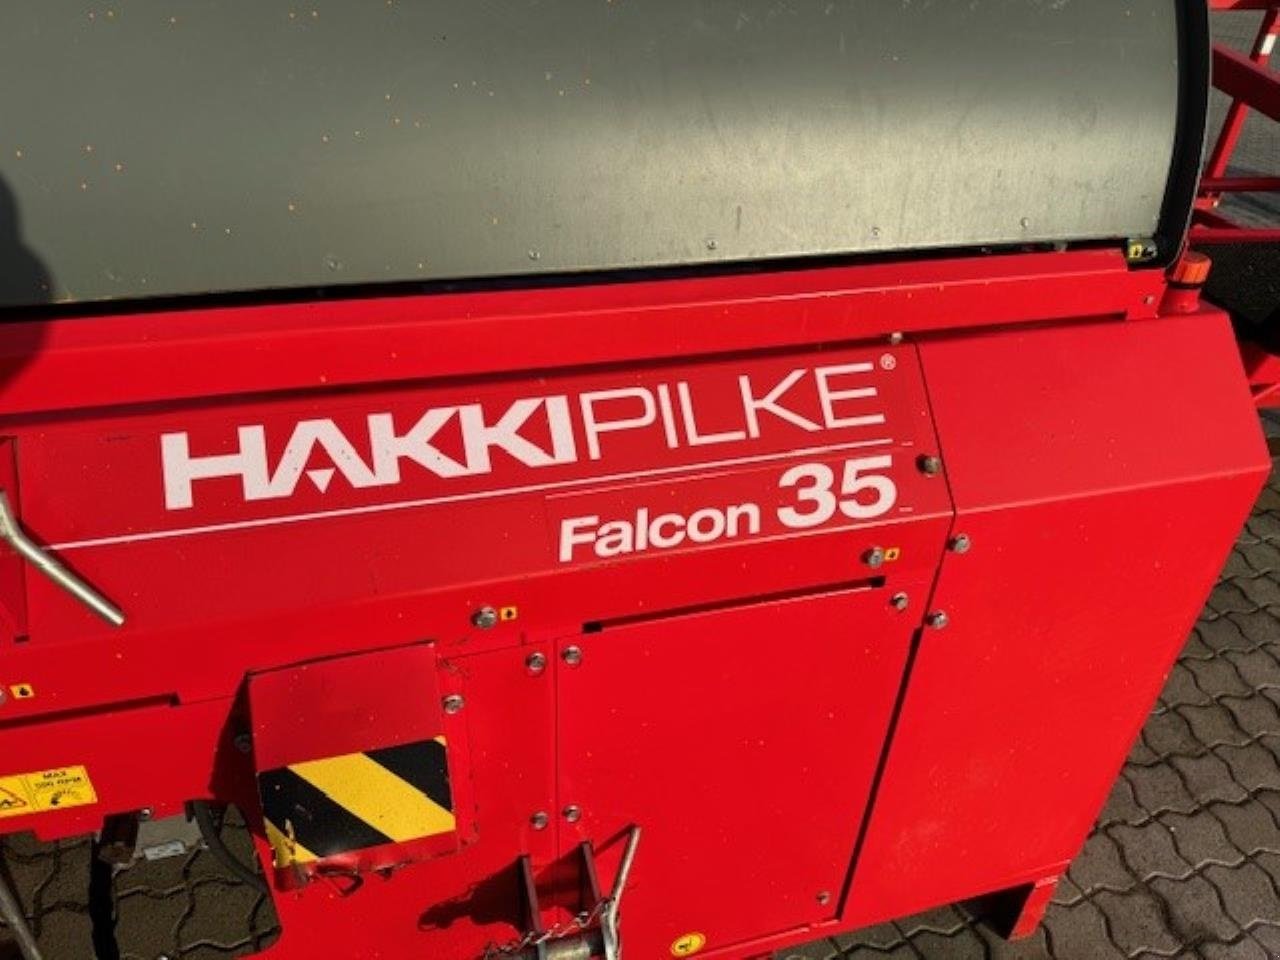 Holzspalter des Typs Hakki Pilke FALCON 35 TRÆKLØVER, Gebrauchtmaschine in Brønderslev (Bild 2)